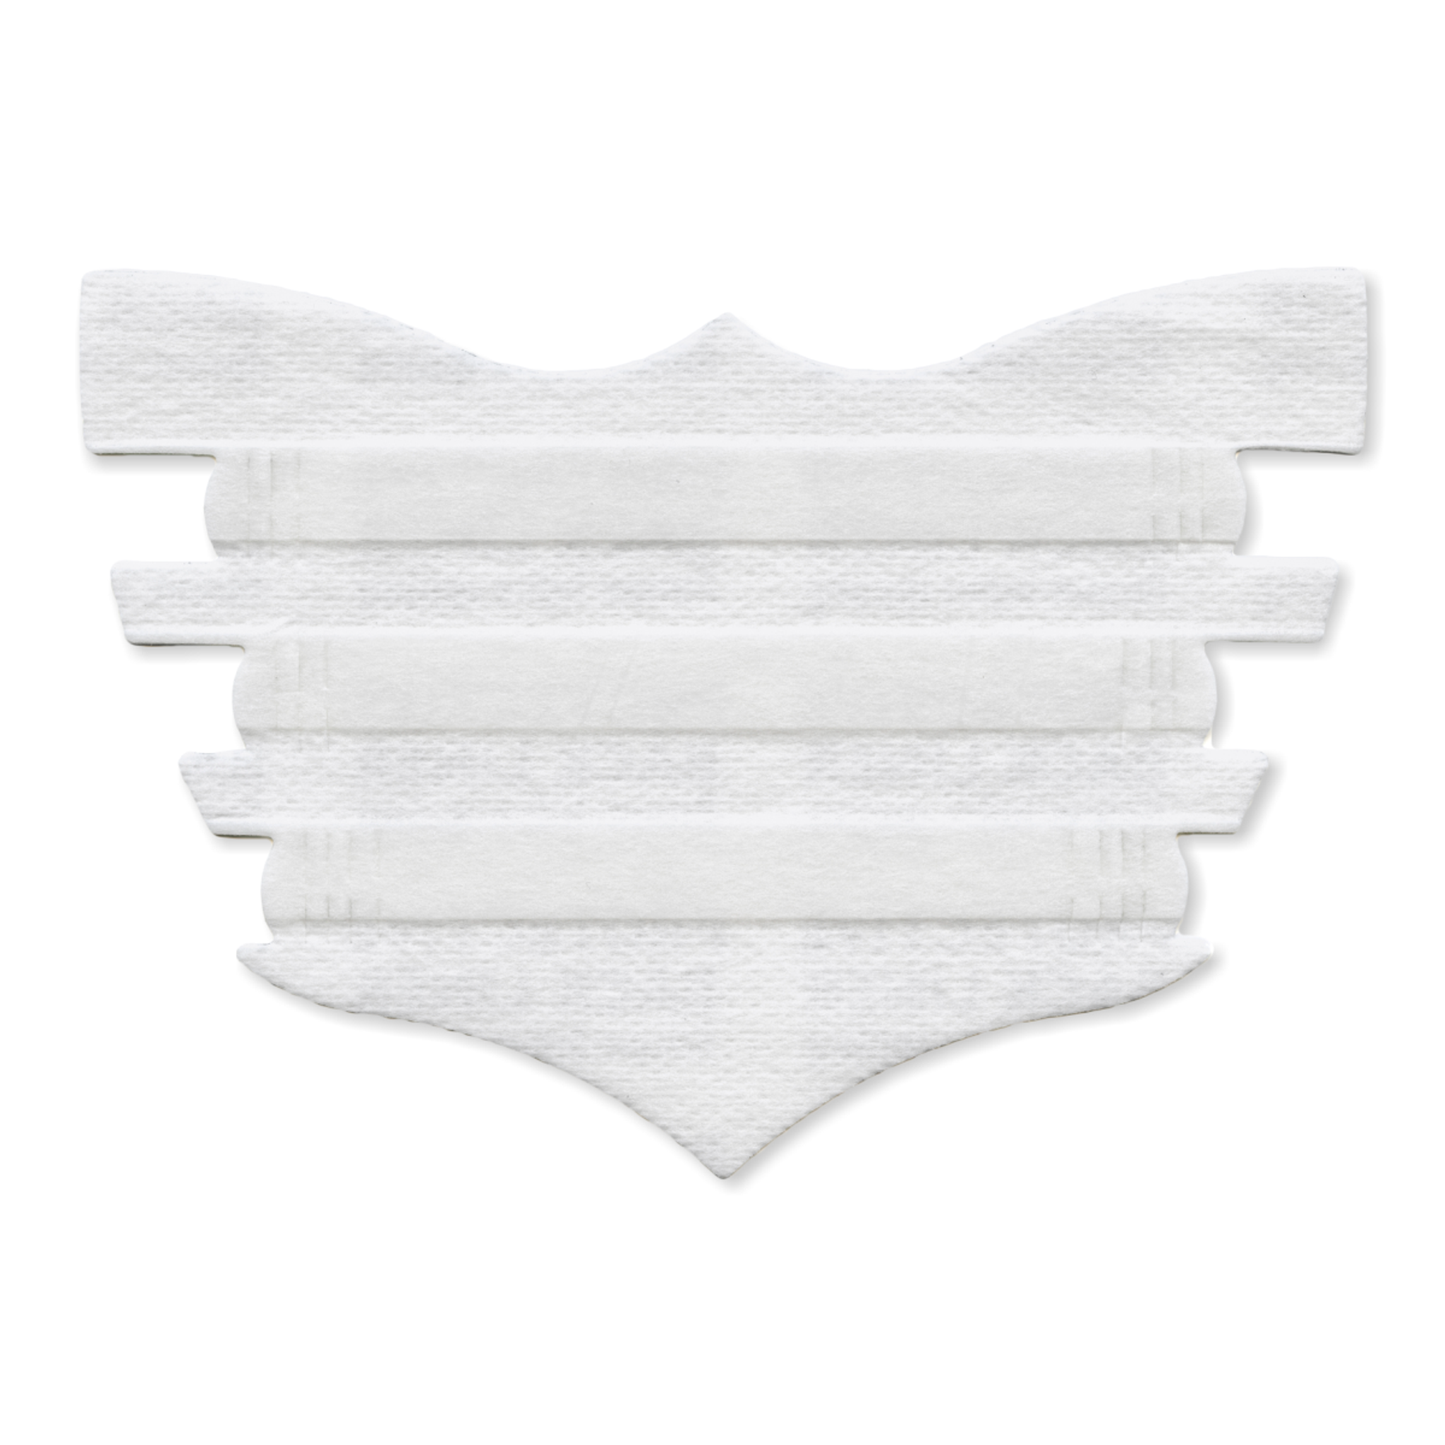 Flair Equine Nasal Strips - Single White